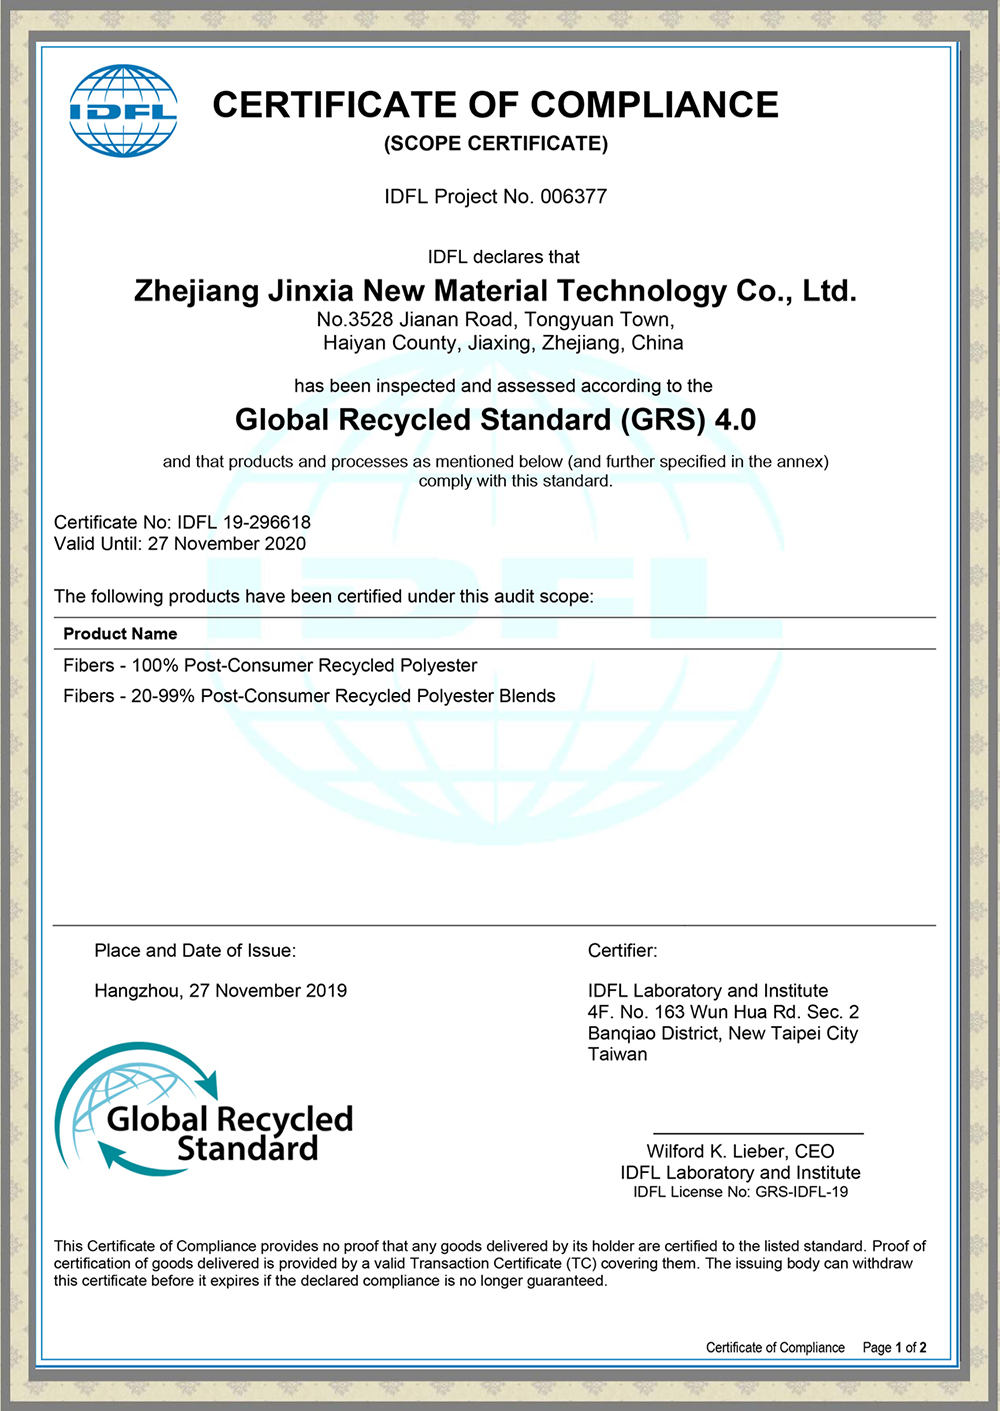 GRS certification